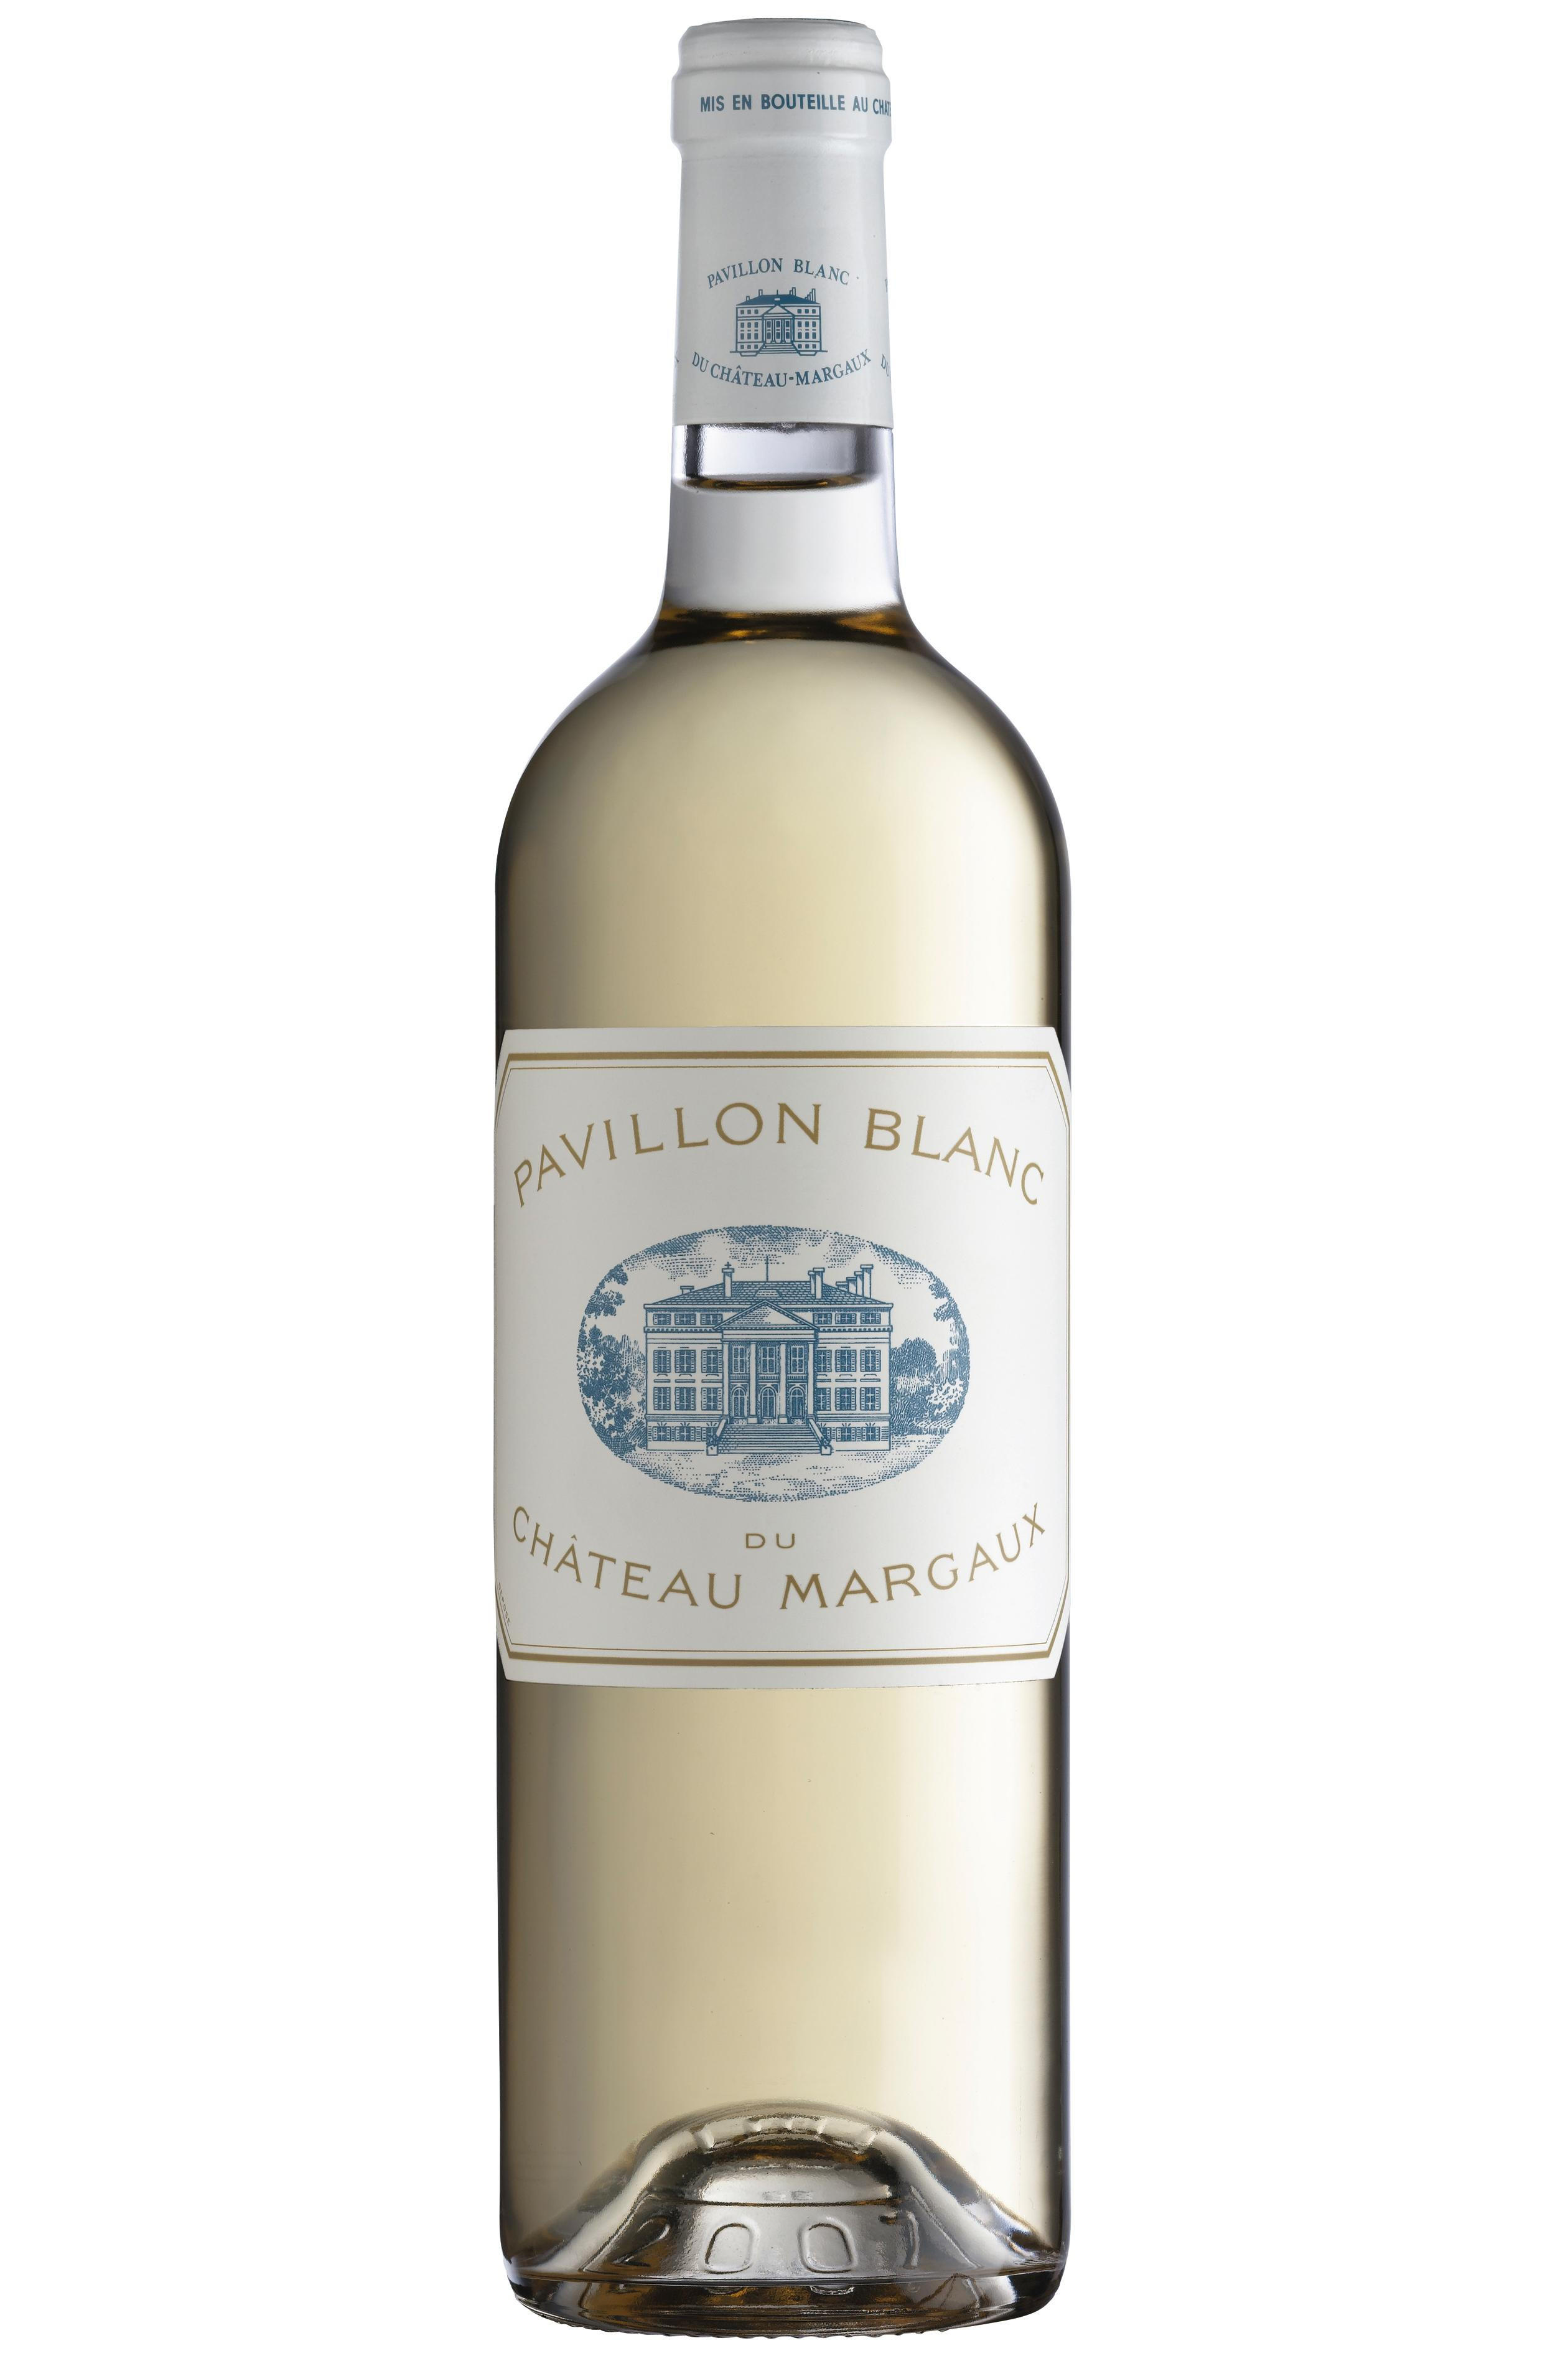 PAVILLON BLANC DU CHATEAU MARGAUX 2011 大きな割引 - ワイン